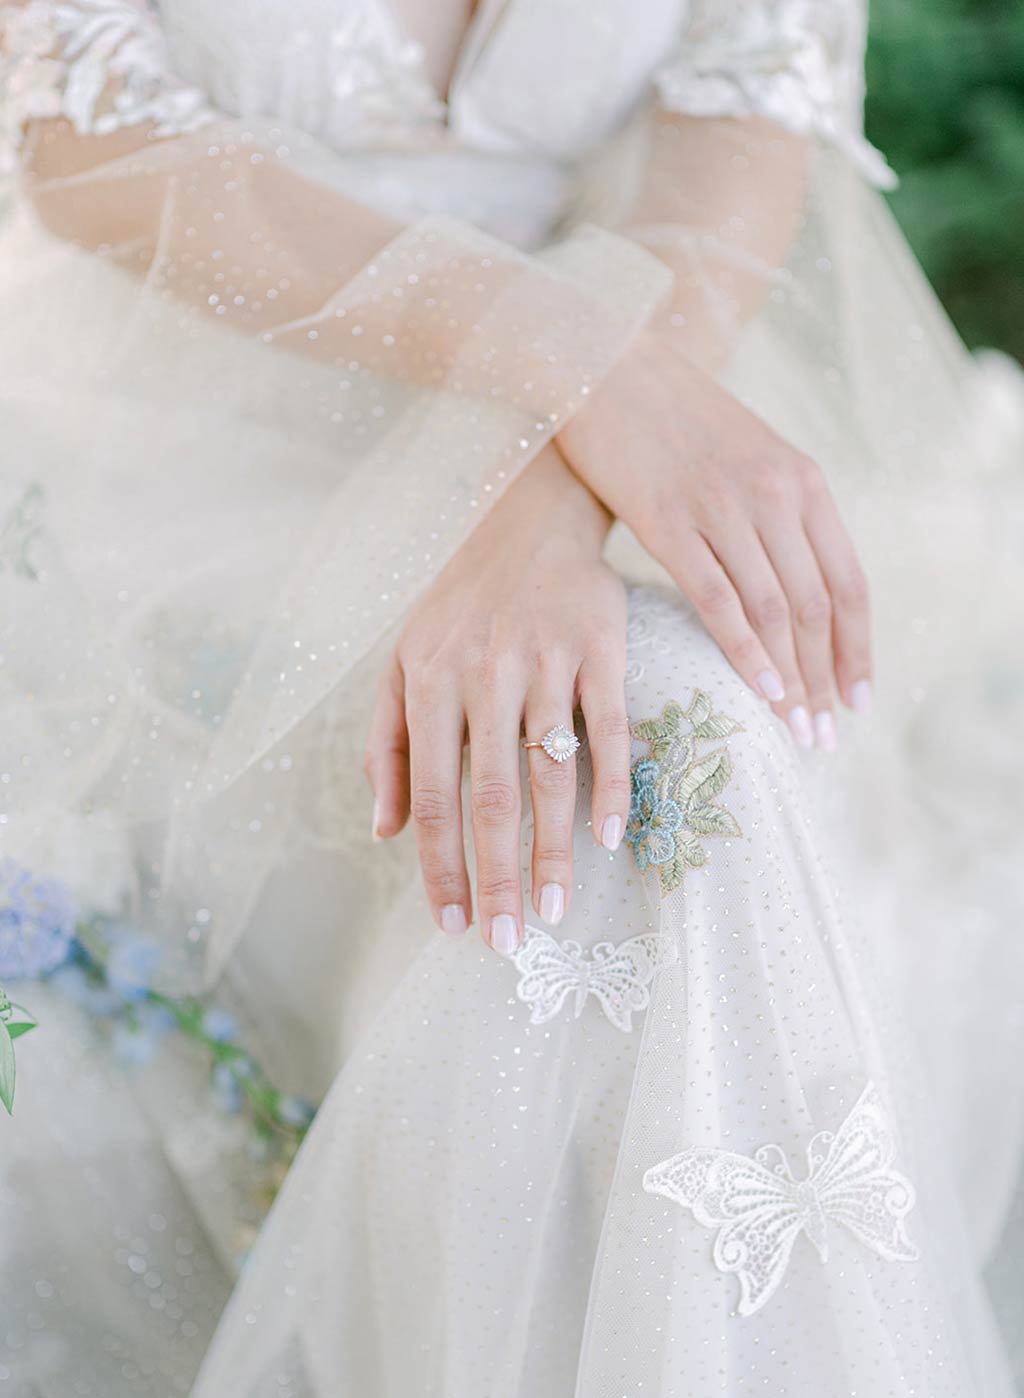 Wedding Ring with Wedding Dress